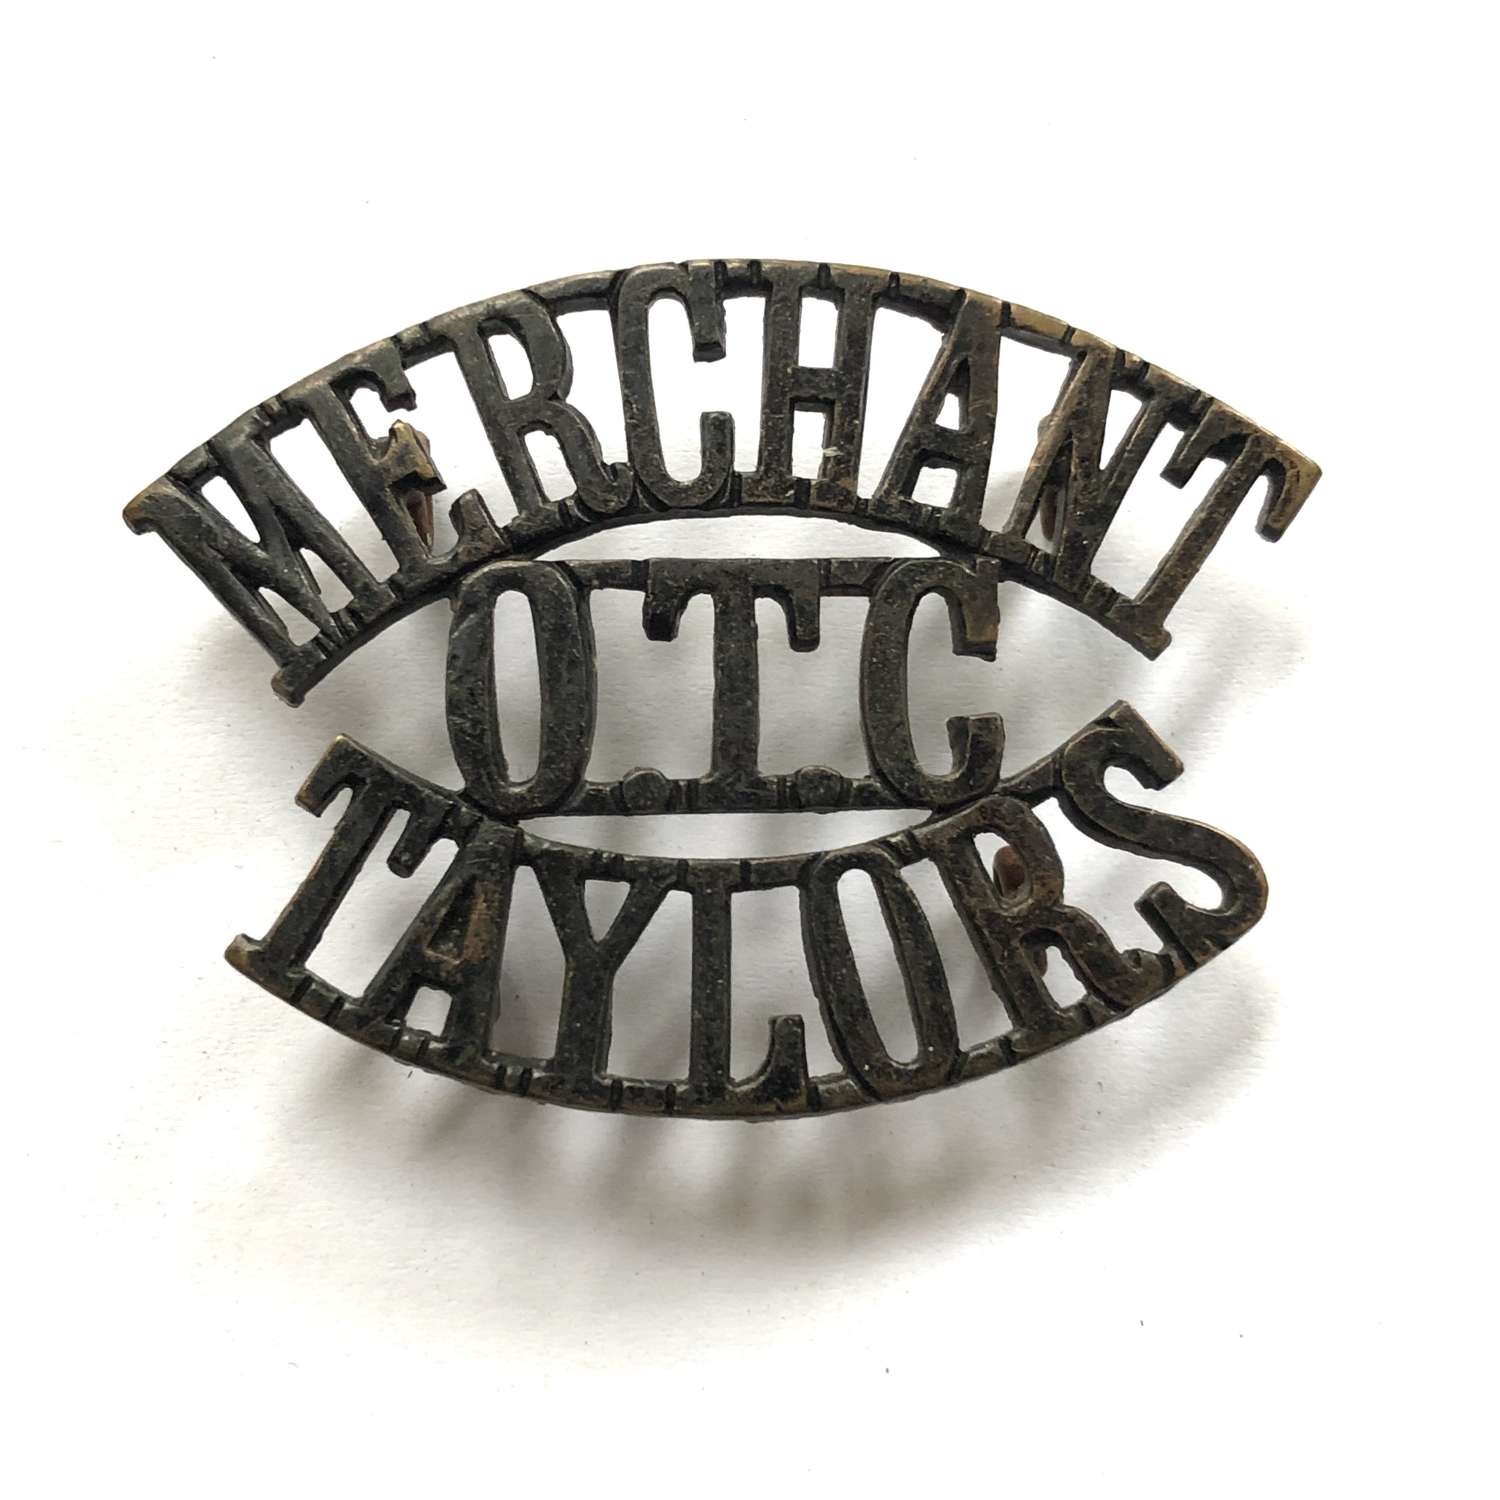 MERCHANT / OTC / TAYLORS shoulder title c1908-40